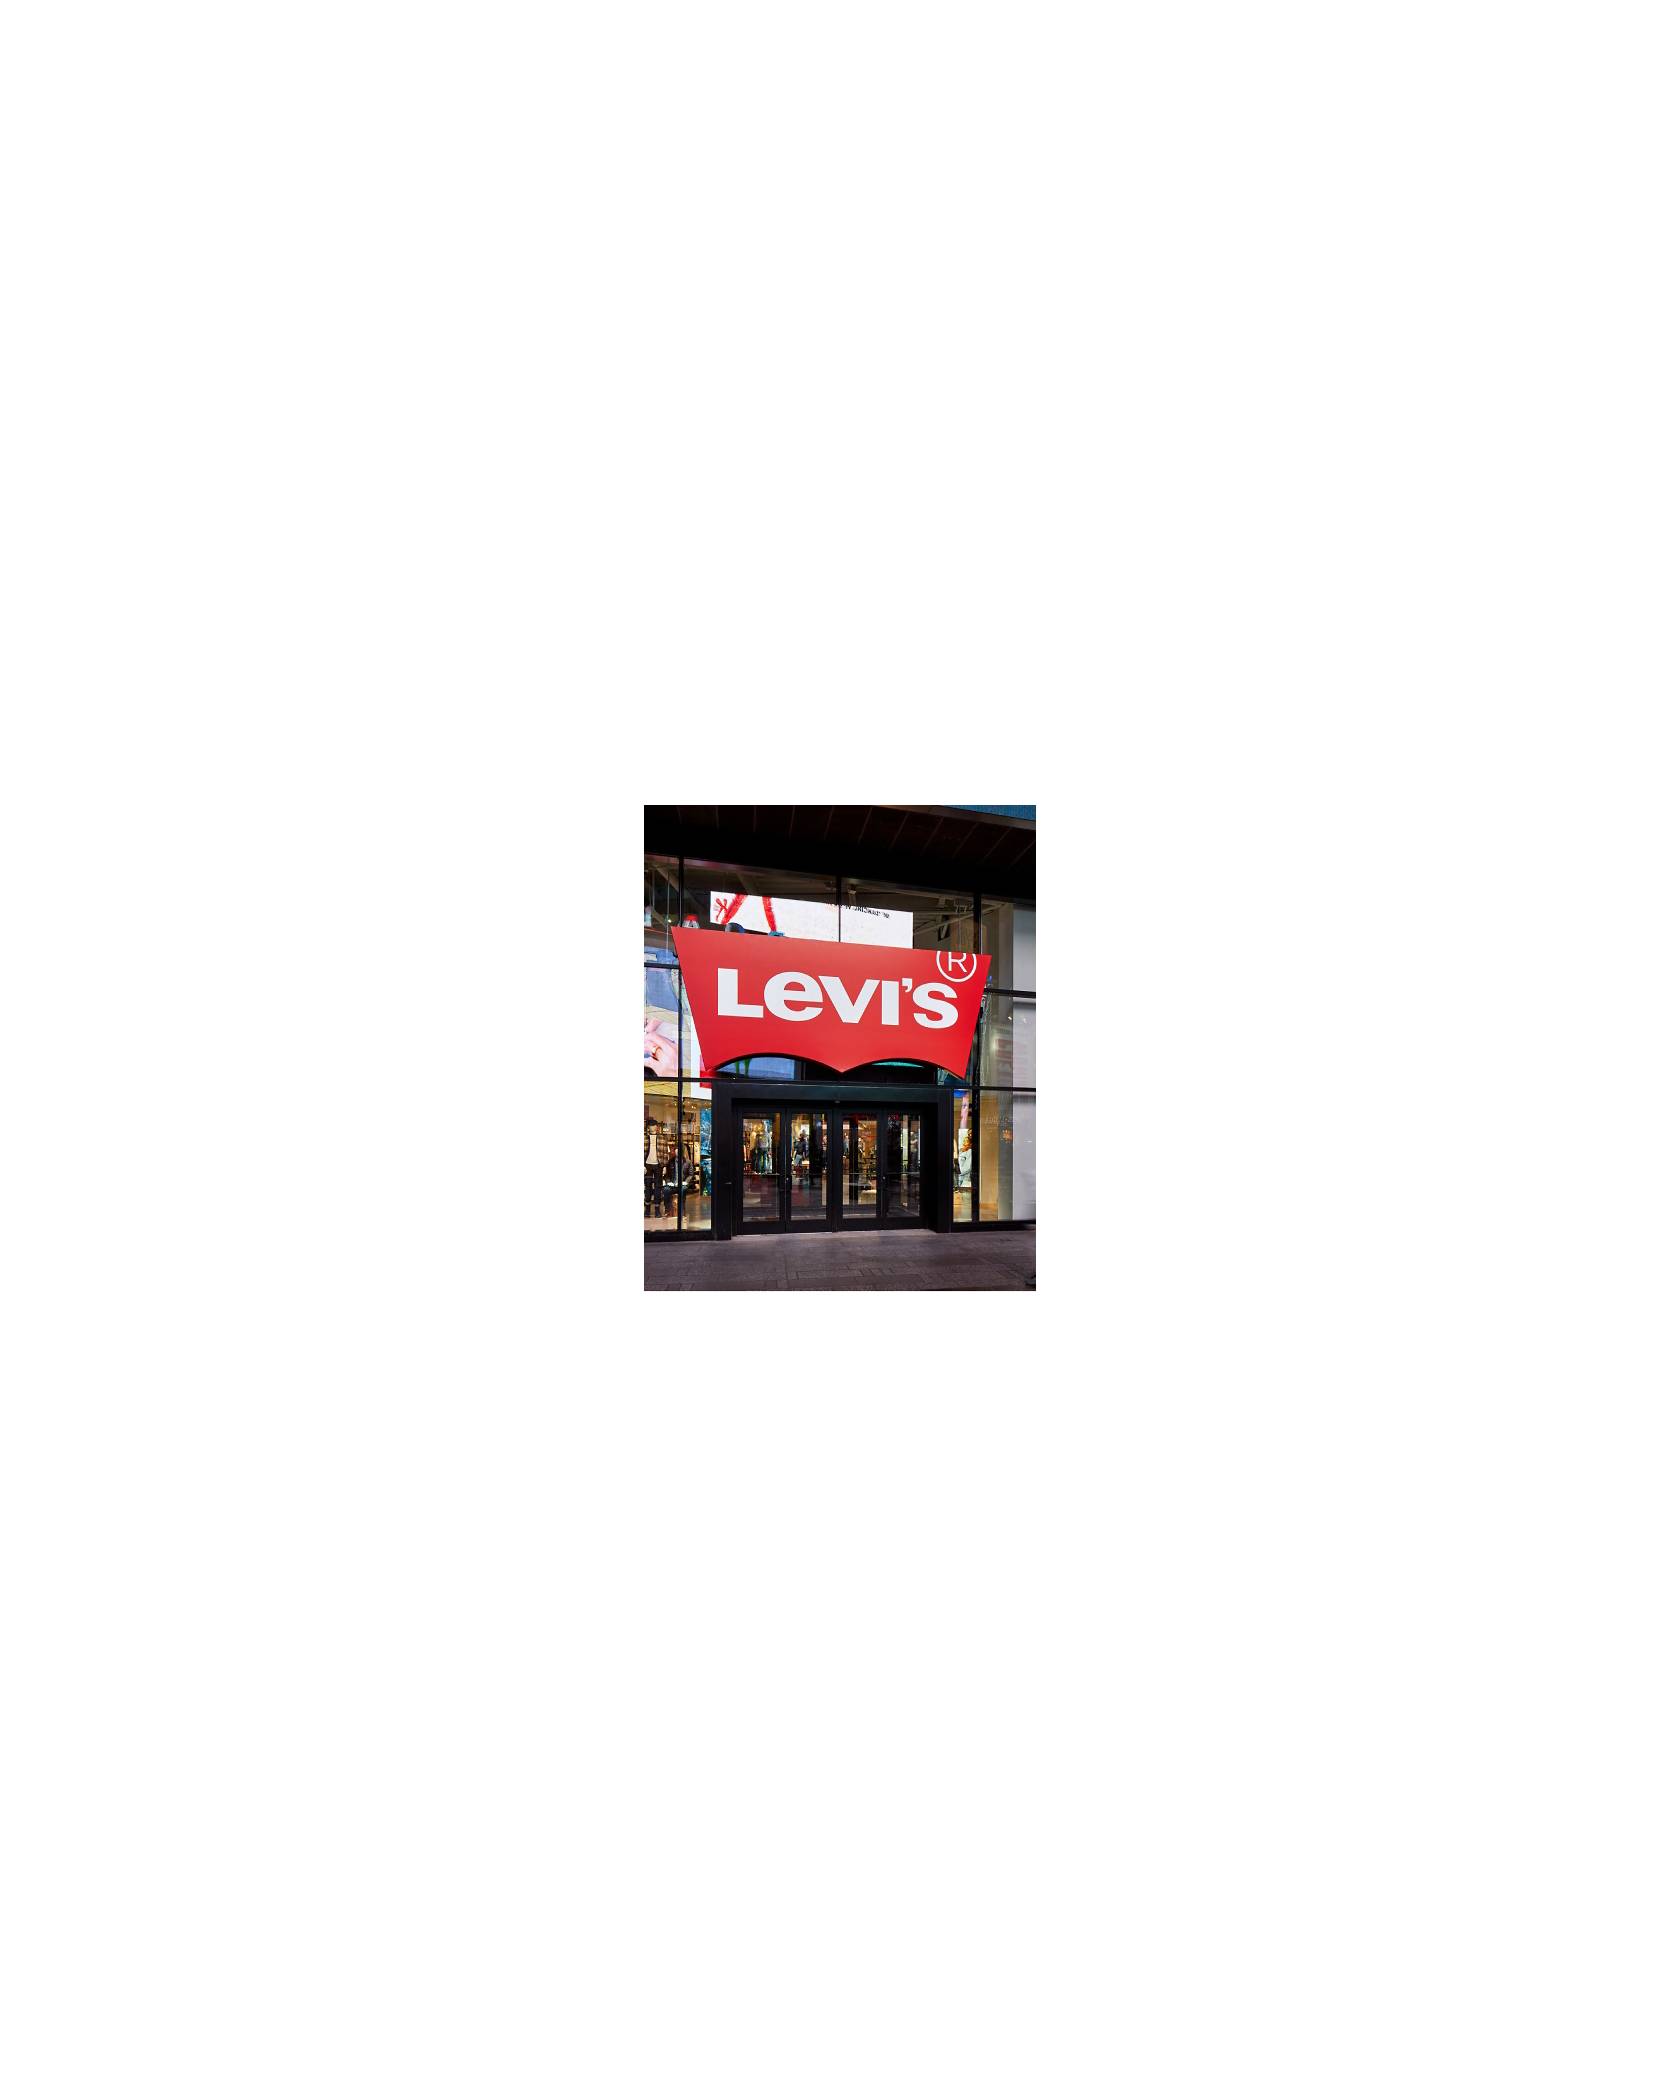 Levi's store front